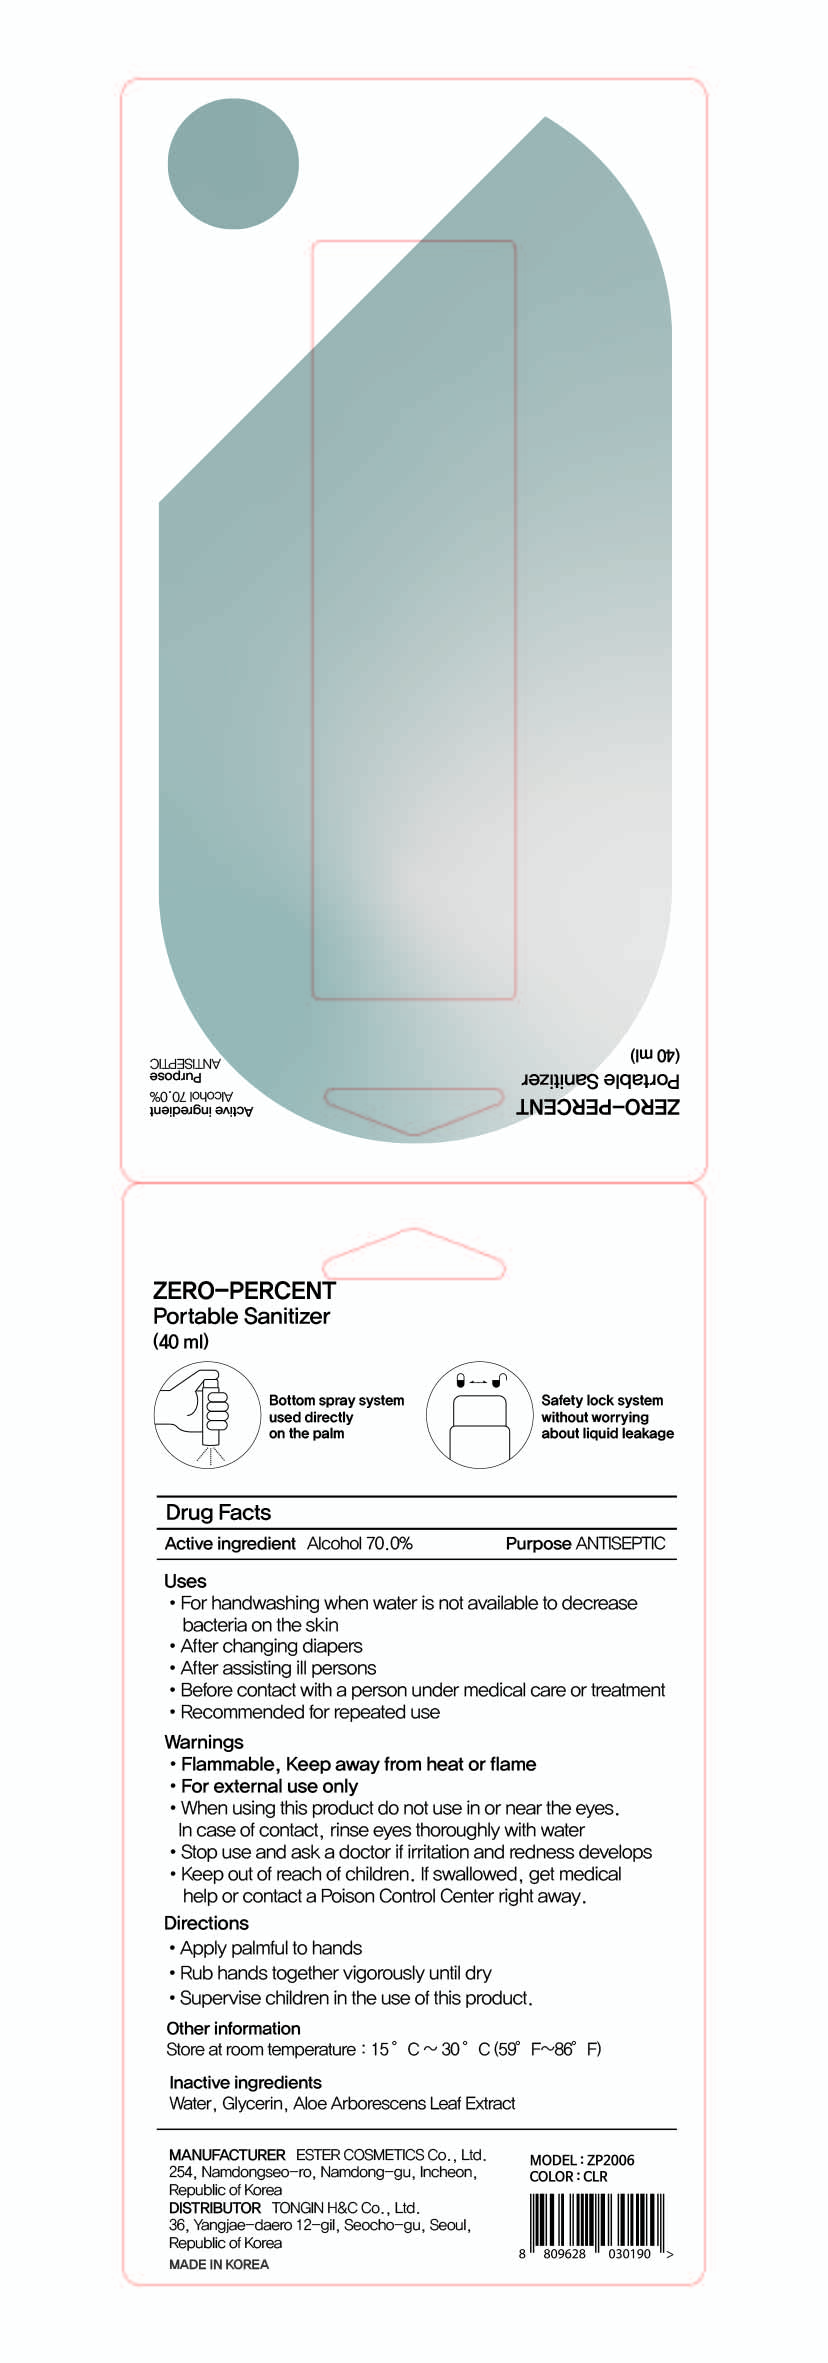 ZERO-PERCENT Portable Sanitizer